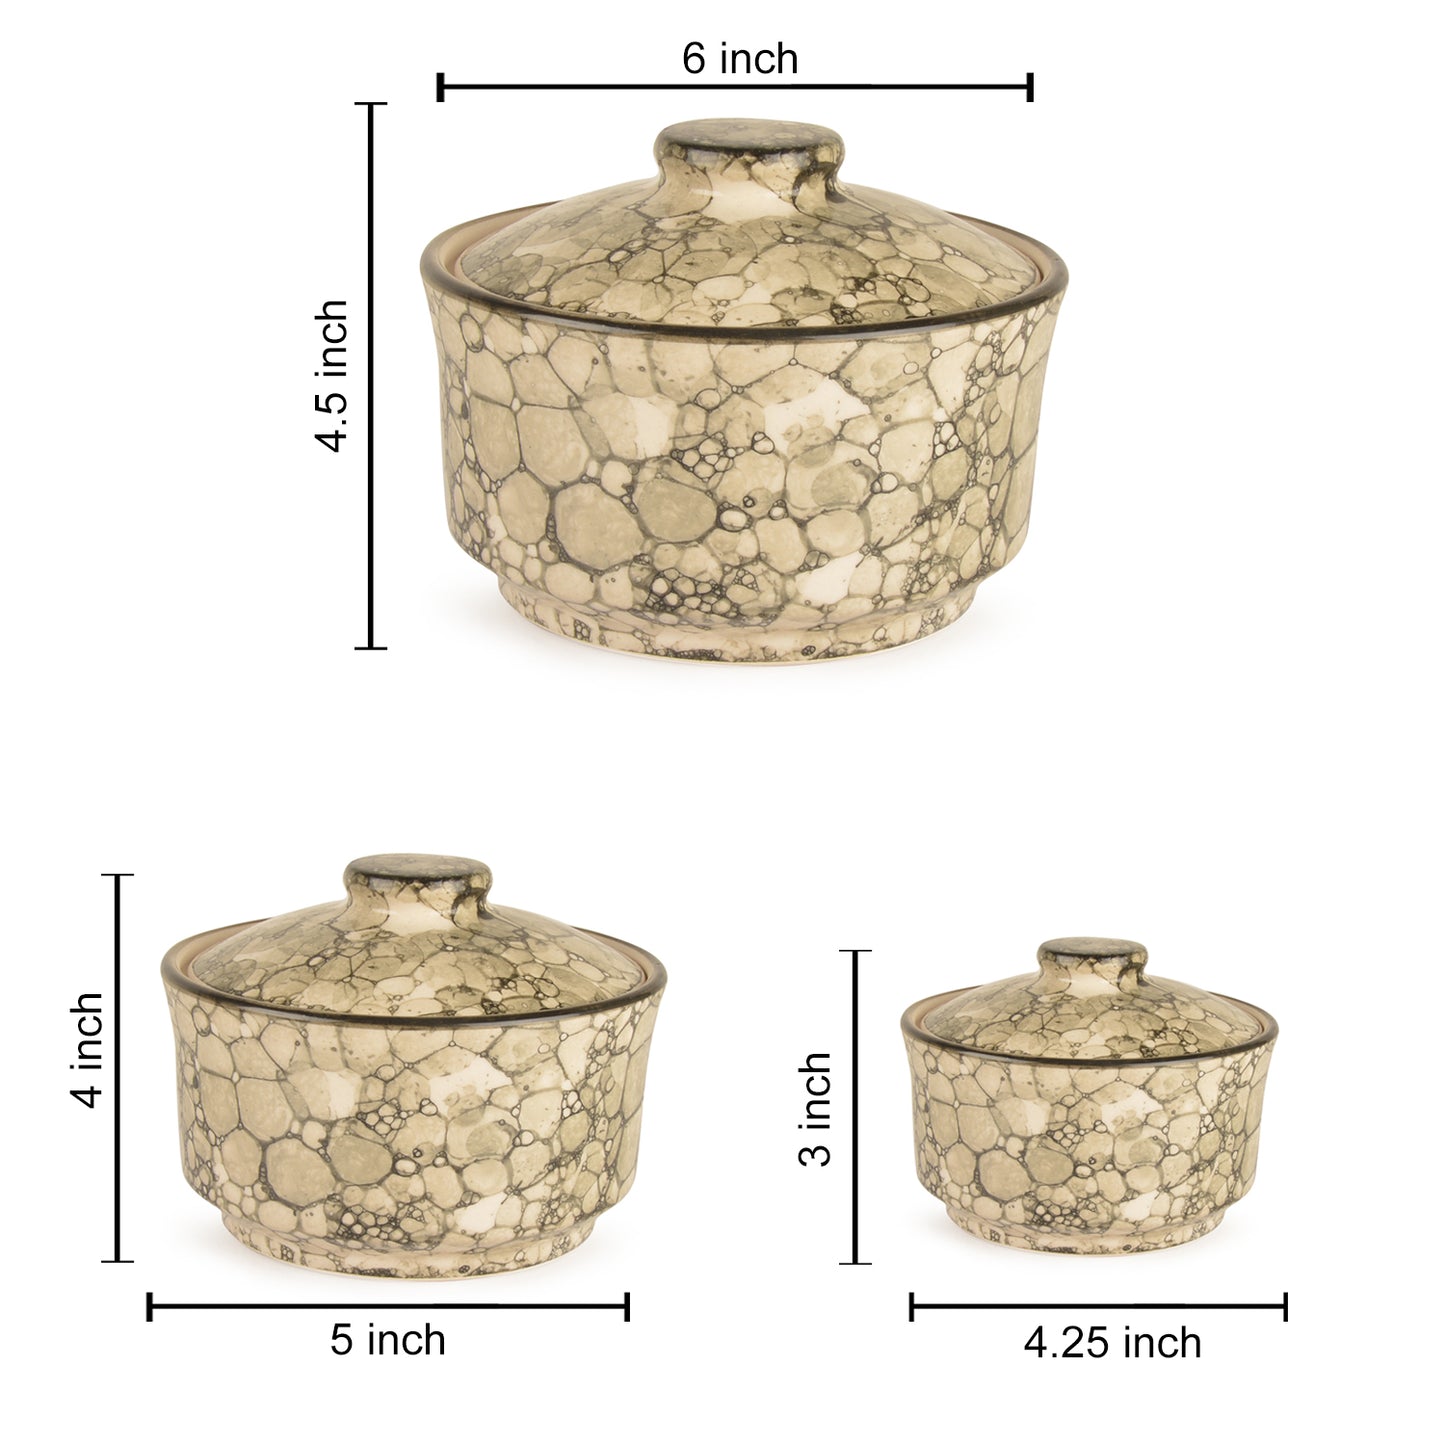 Studio Pottery Handpainted Ceramic Serving Donga with Lid Casserole Set (Set of 3, Grey Lustre)